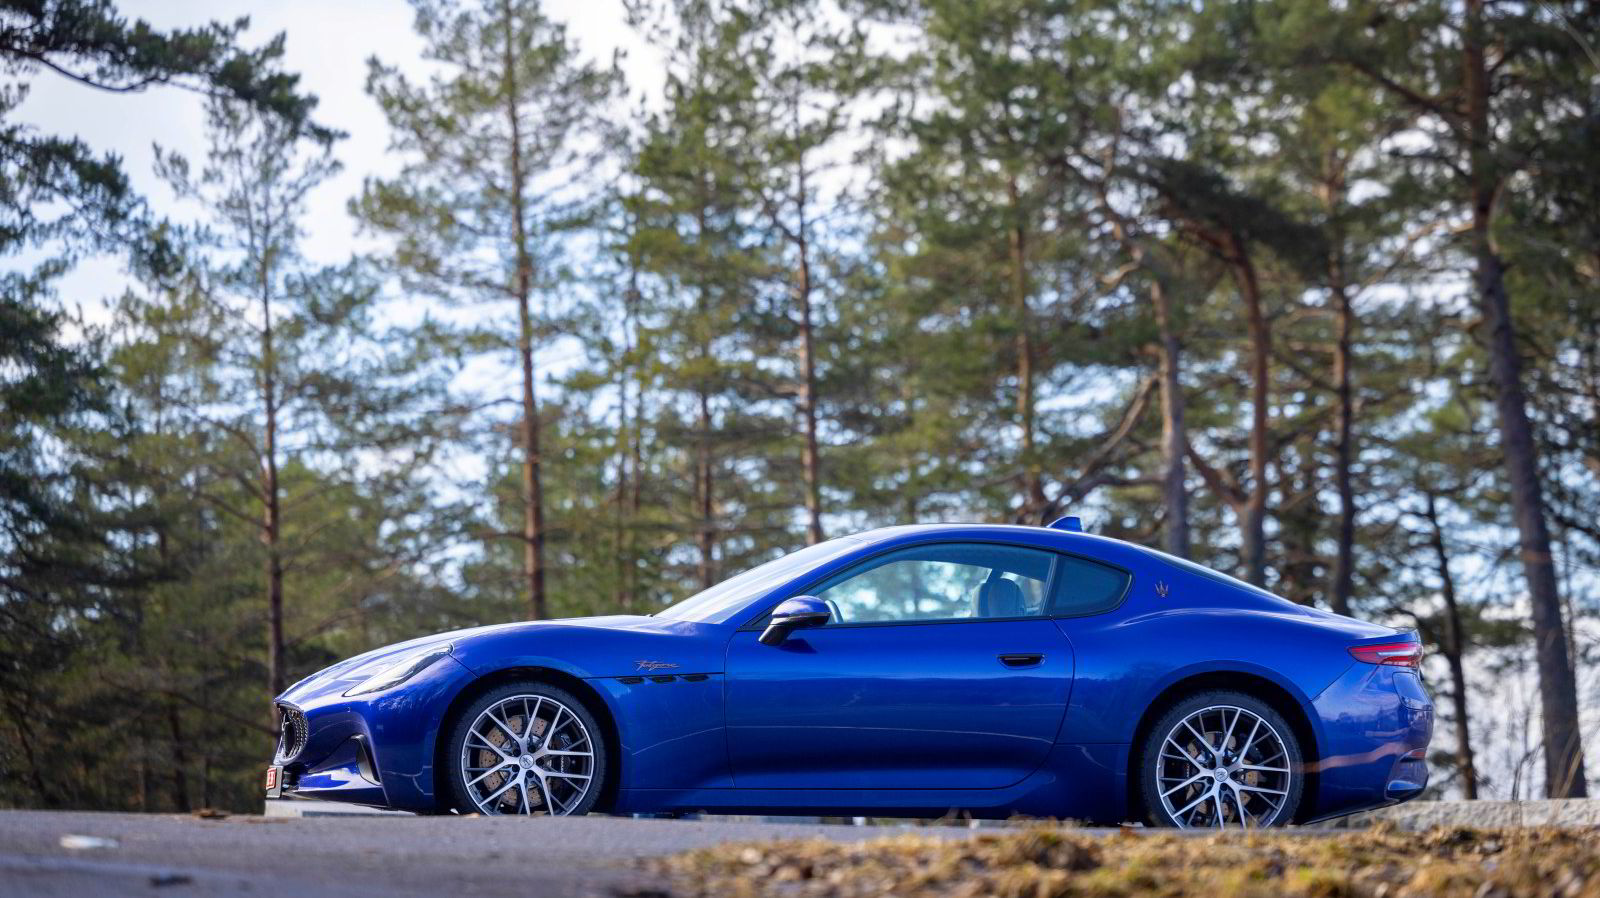 Biltest av Maserati Granturismo Folgore: Elbil-eleganten